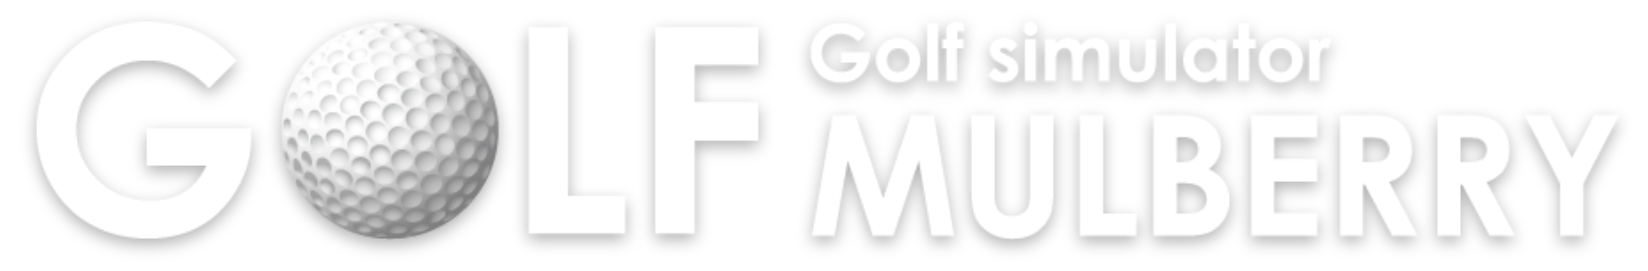 Golf simulator GOLF MULBERRY